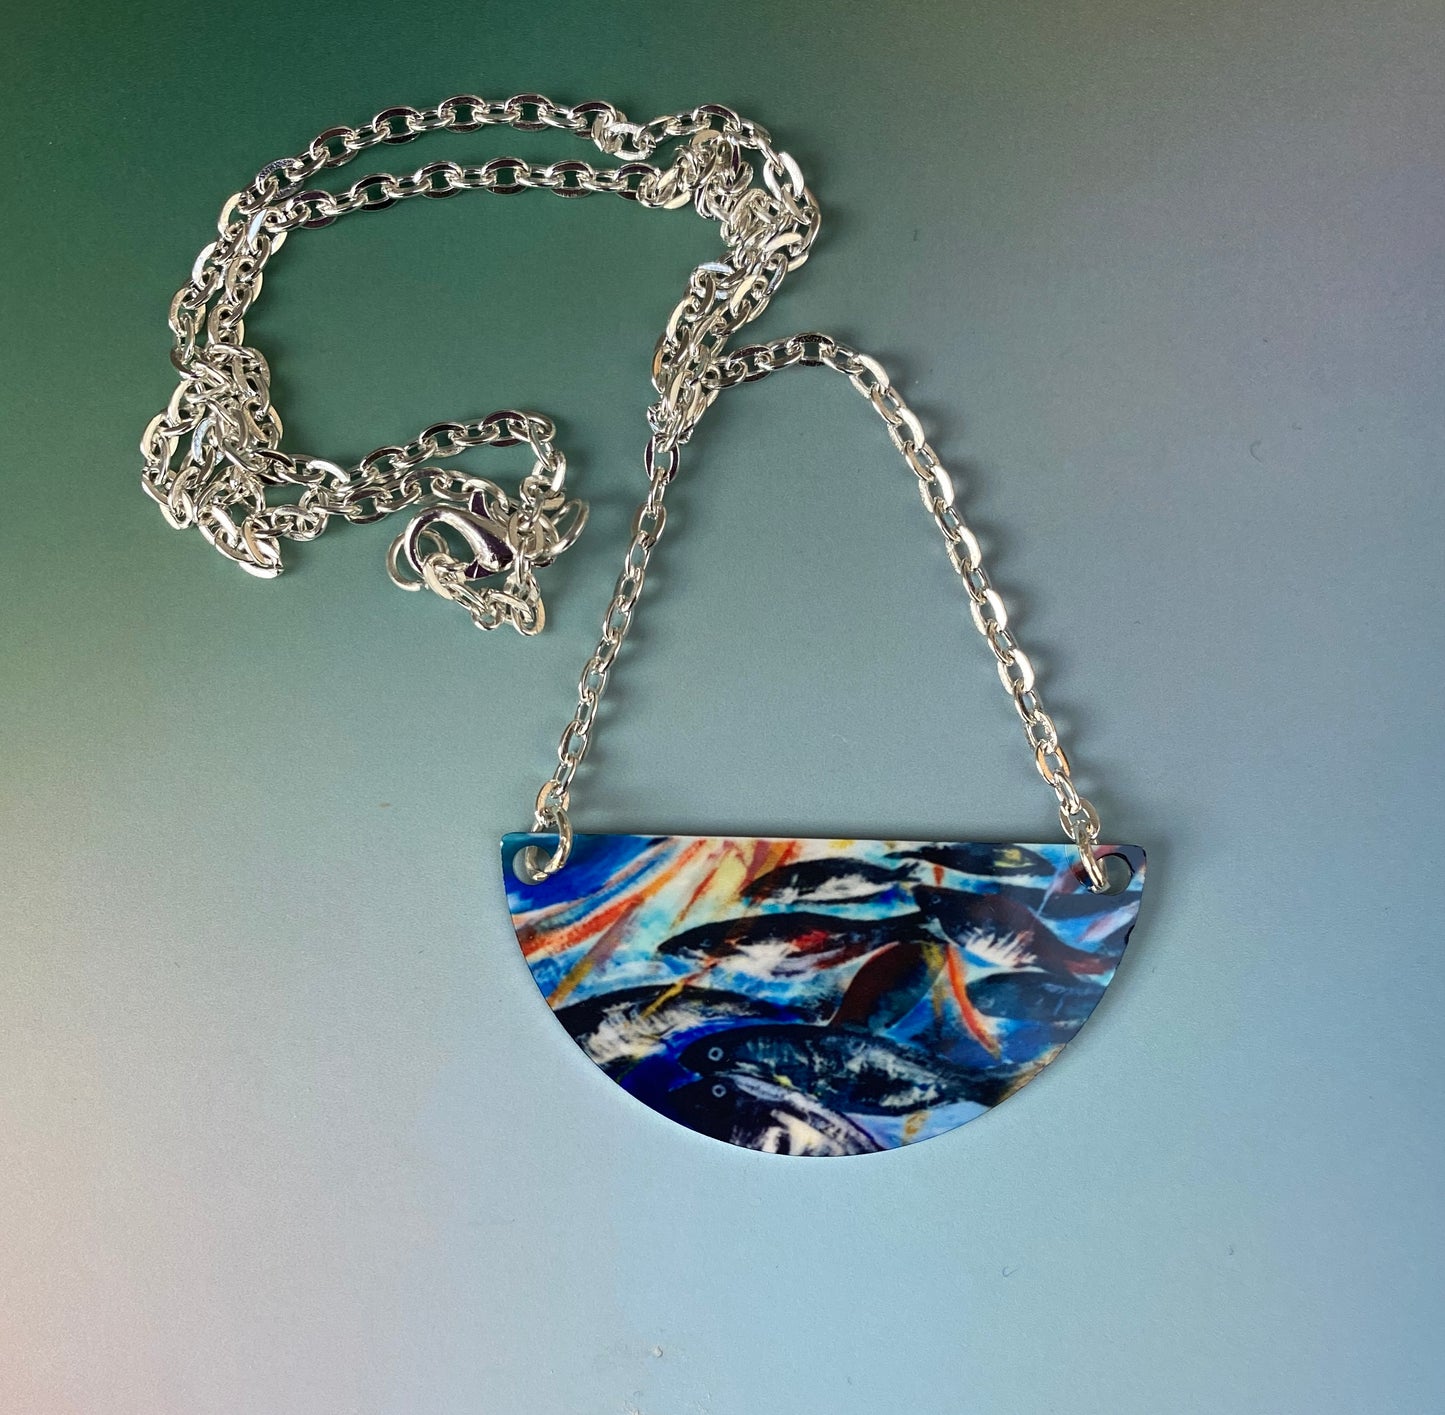 A pendant necklace design, Silver darlings by Orkney artist Jane Glue, Scotland